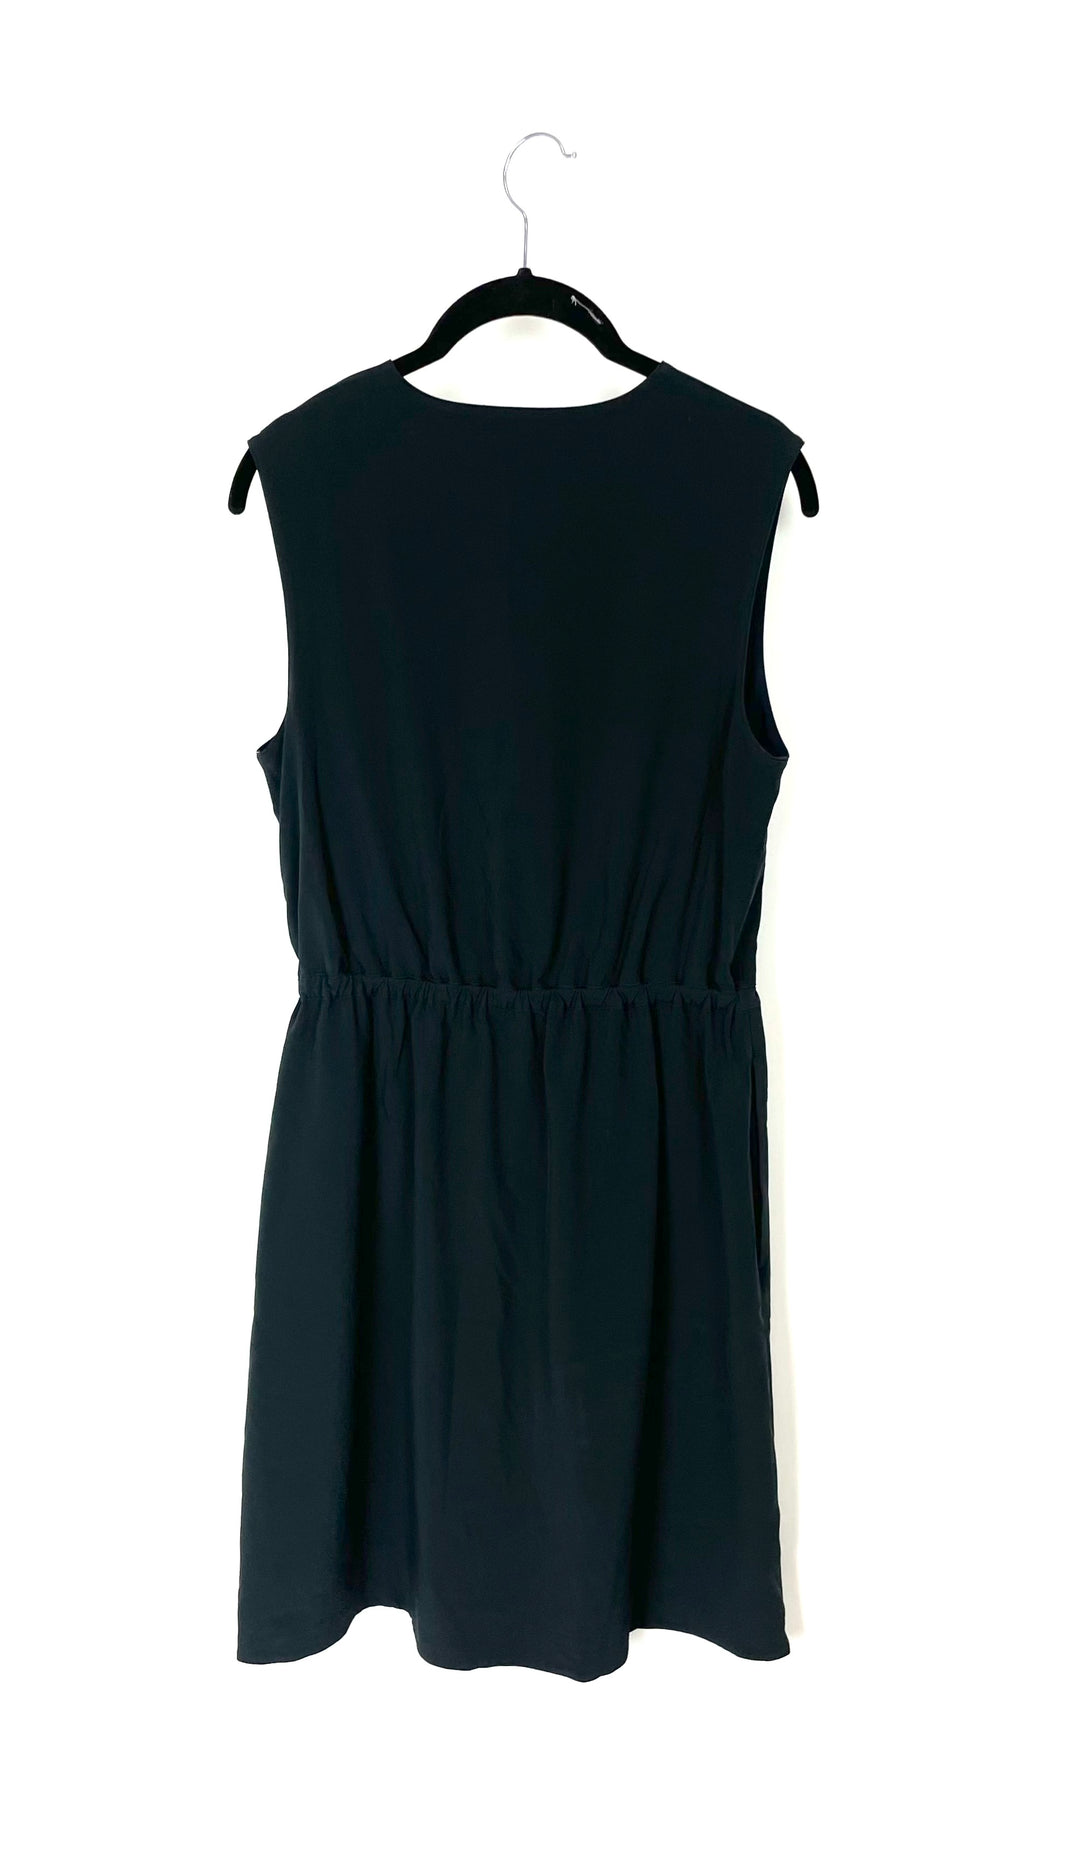 Black High Neckline Dress - Small